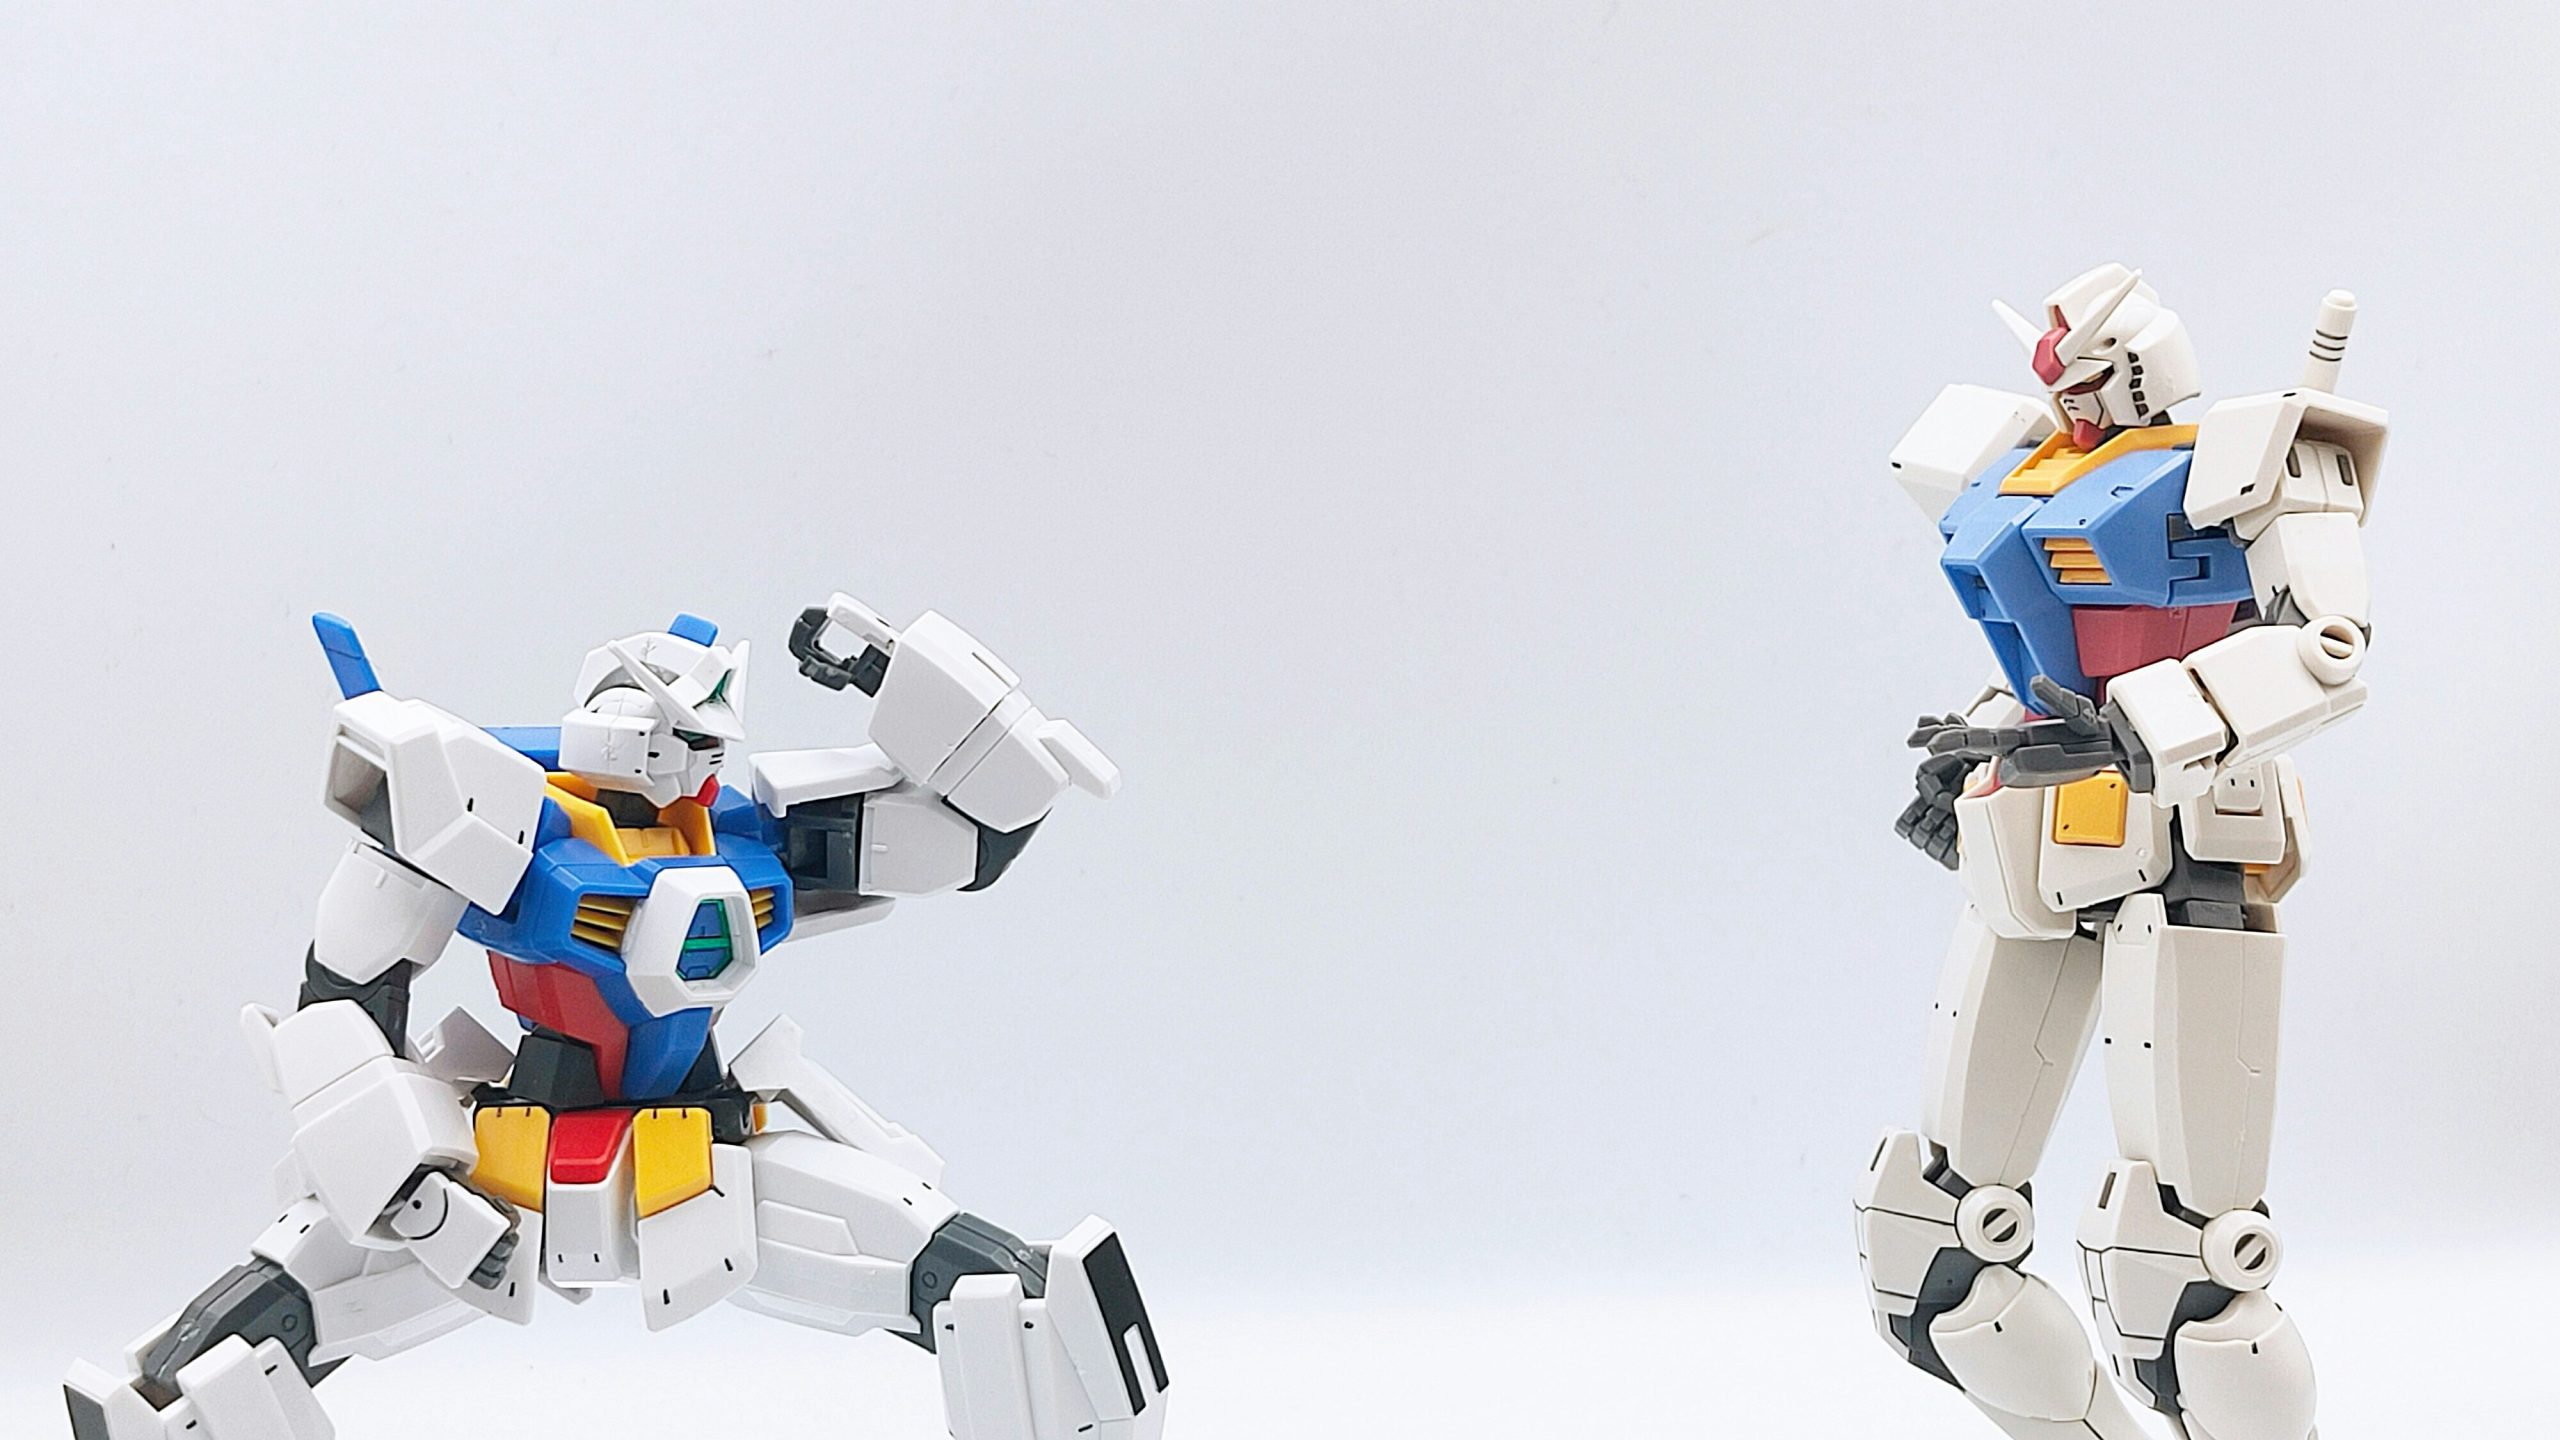 Robot toys. Photo by Jeffrey Ho on Unsplash. https://unsplash.com/photos/white-blue-and-red-robot-x22UAIdif_k